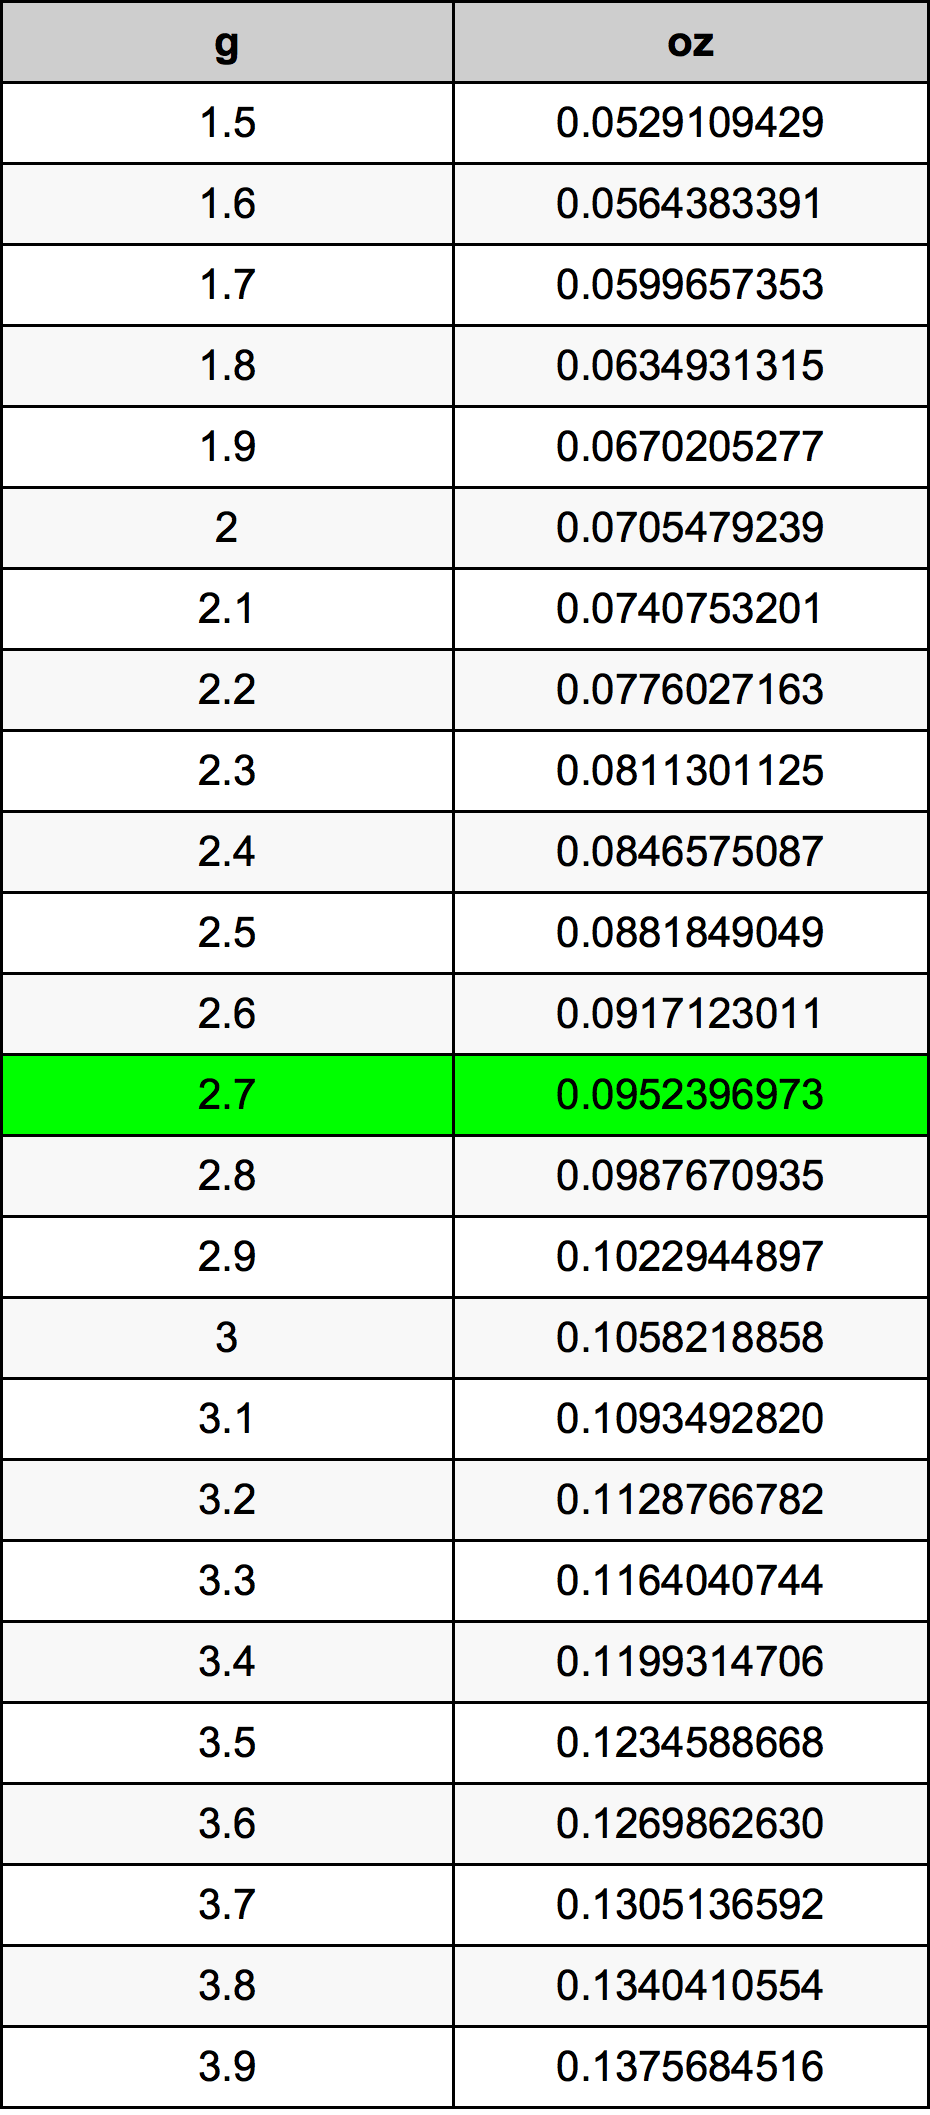 2.7 غرام جدول تحويل